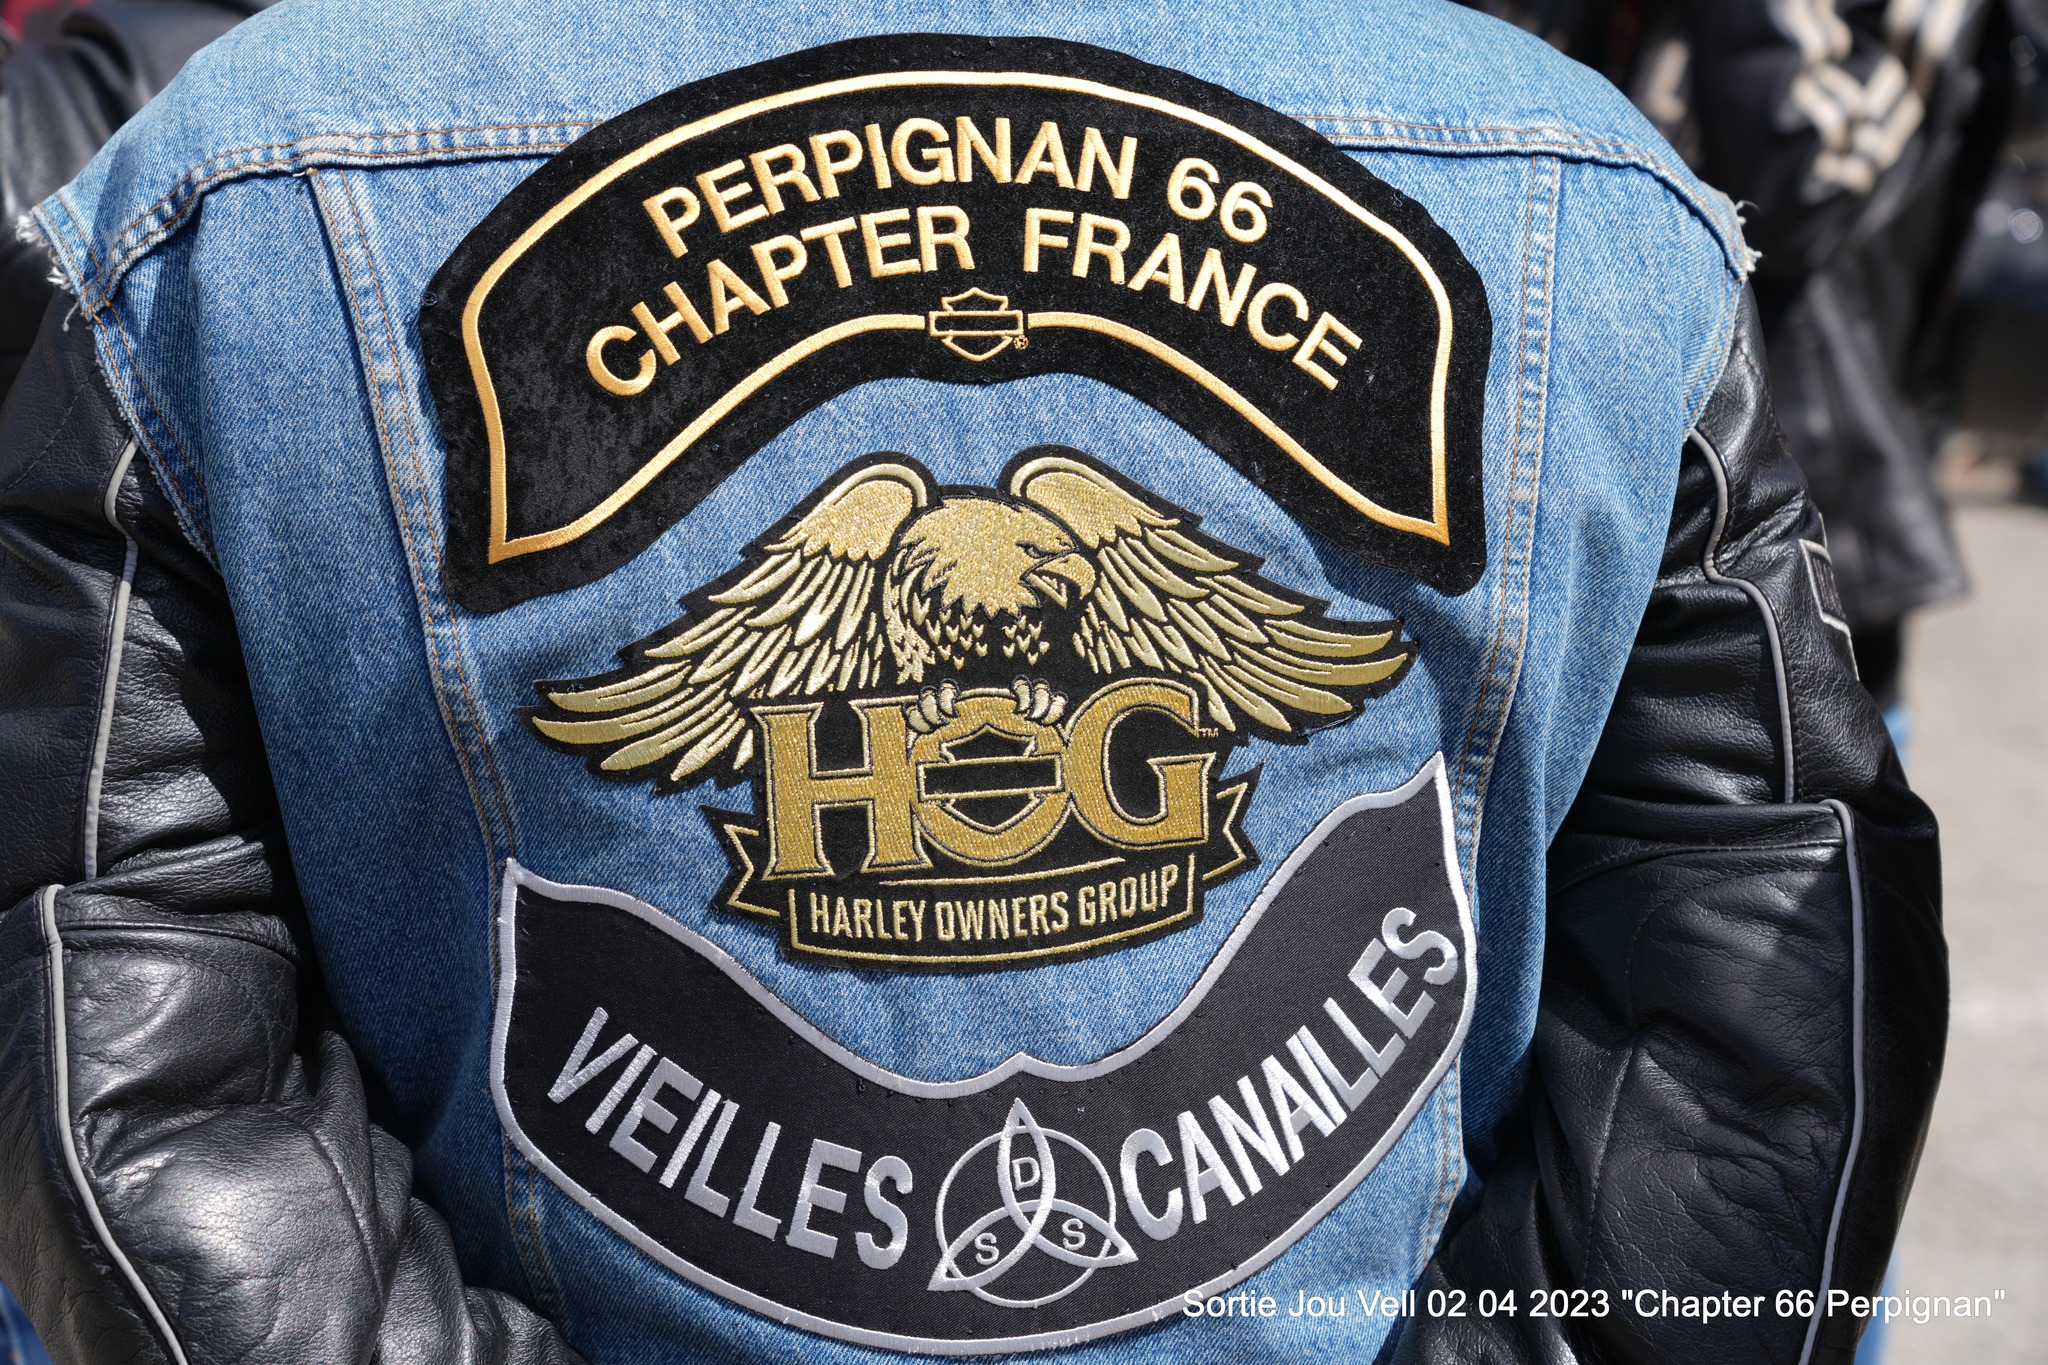 Perpignan 66 Chapter France Jou Vell Vieilles-Canailles